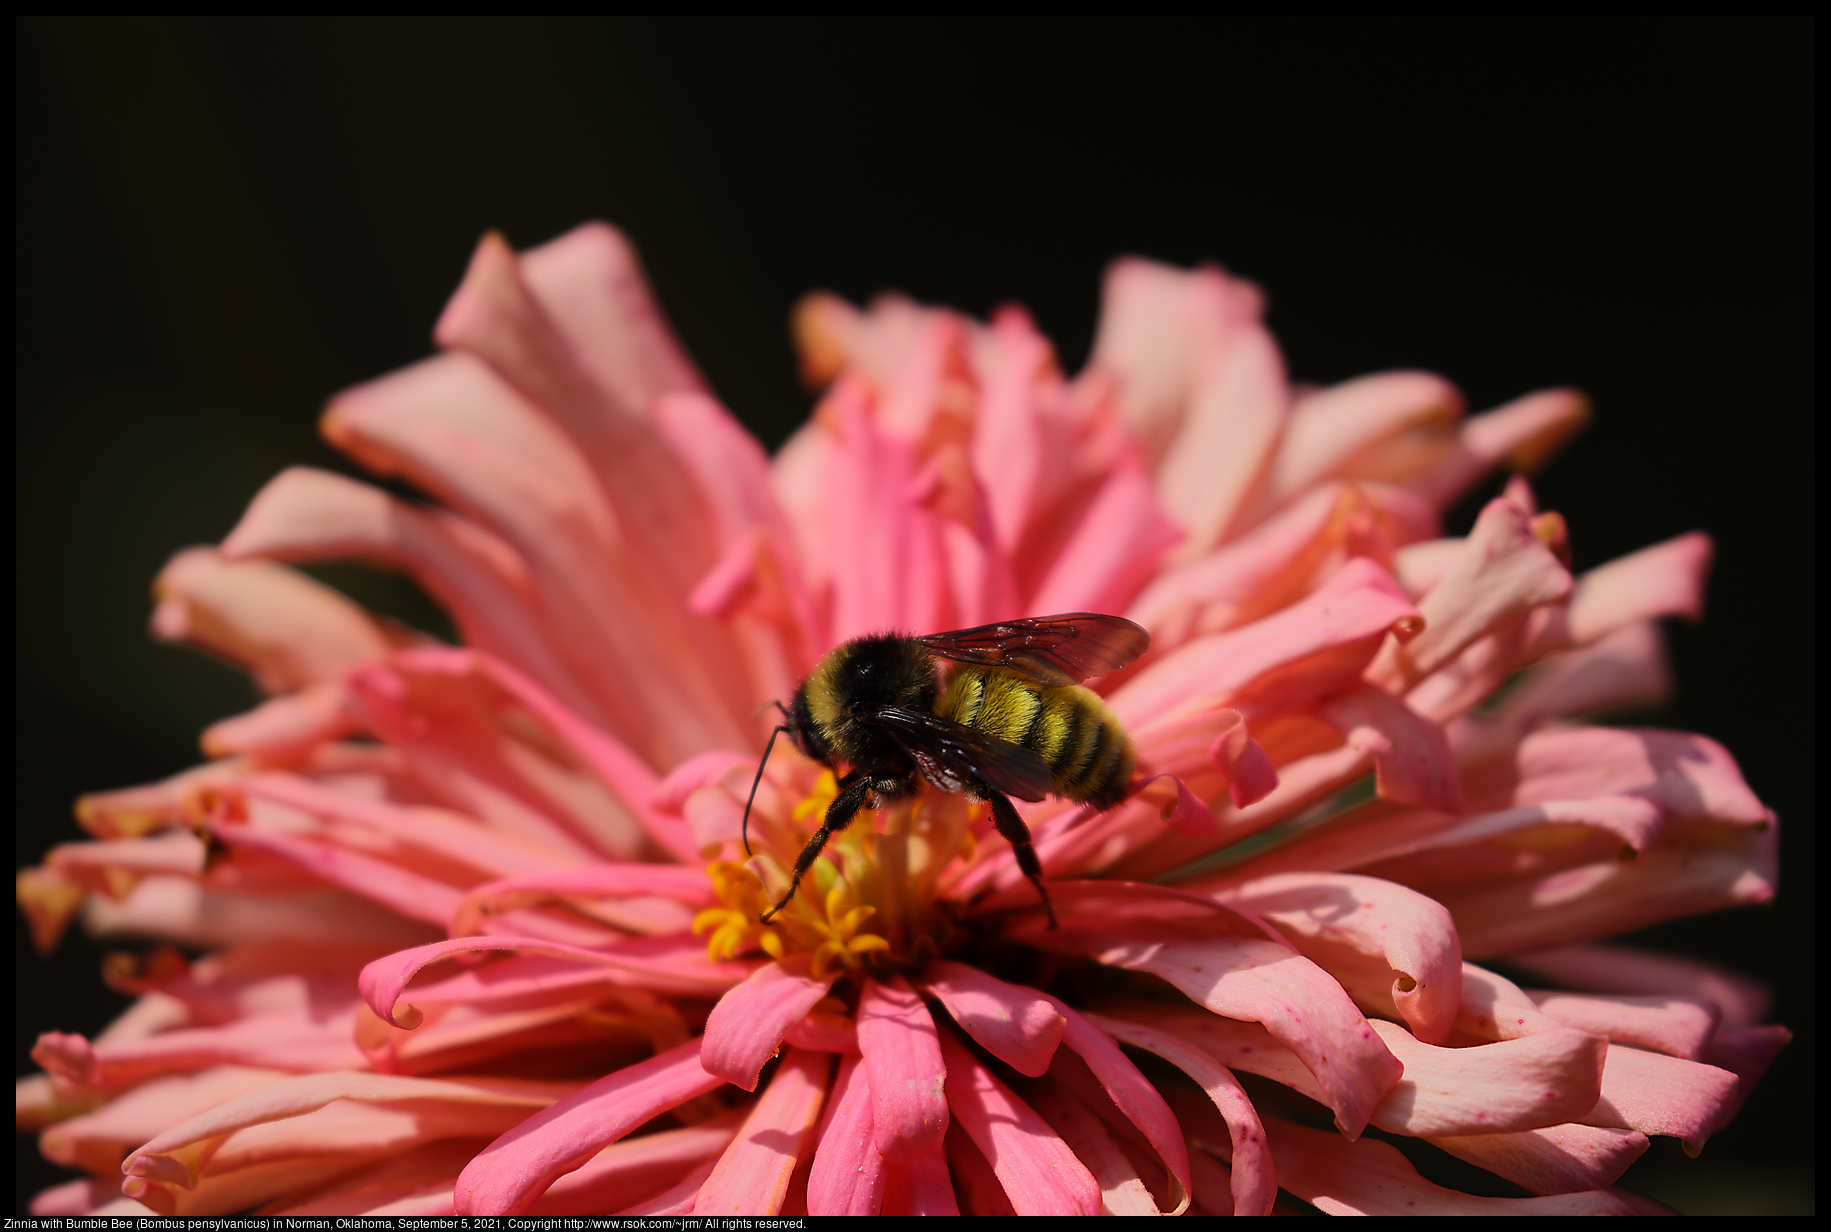 Zinnia with Bumble Bee (Bombus pensylvanicus) in Norman, Oklahoma, September 5, 2021